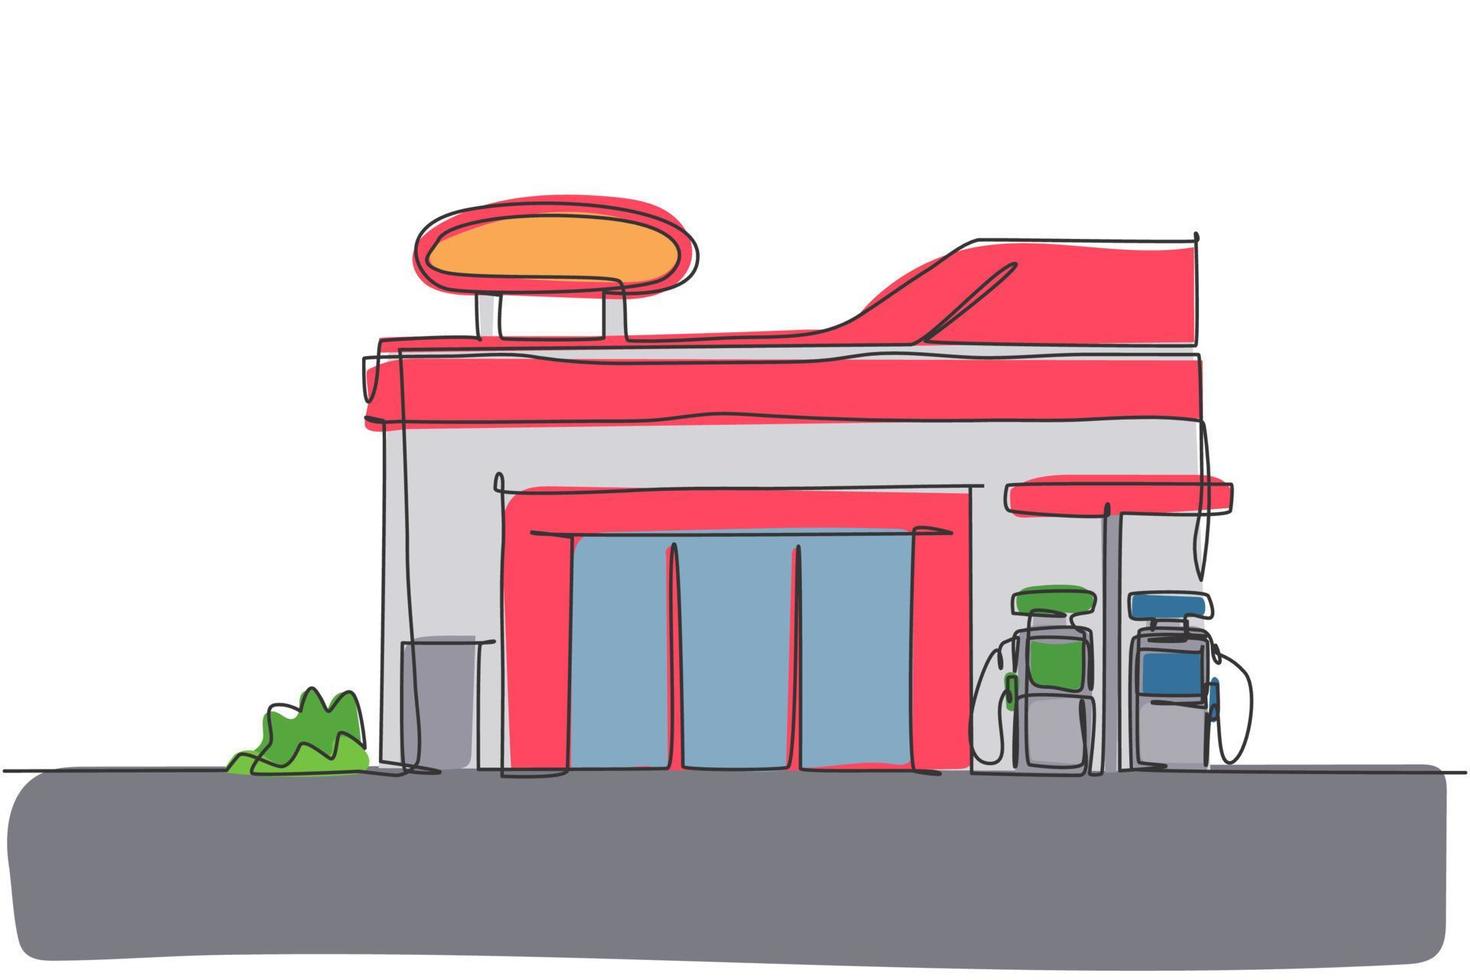 enda en linje ritning av bensinstation byggande på landsbygden. bensinstation service isolerade doodle minimal koncept. trendig kontinuerlig linje rita design grafisk vektor illustration